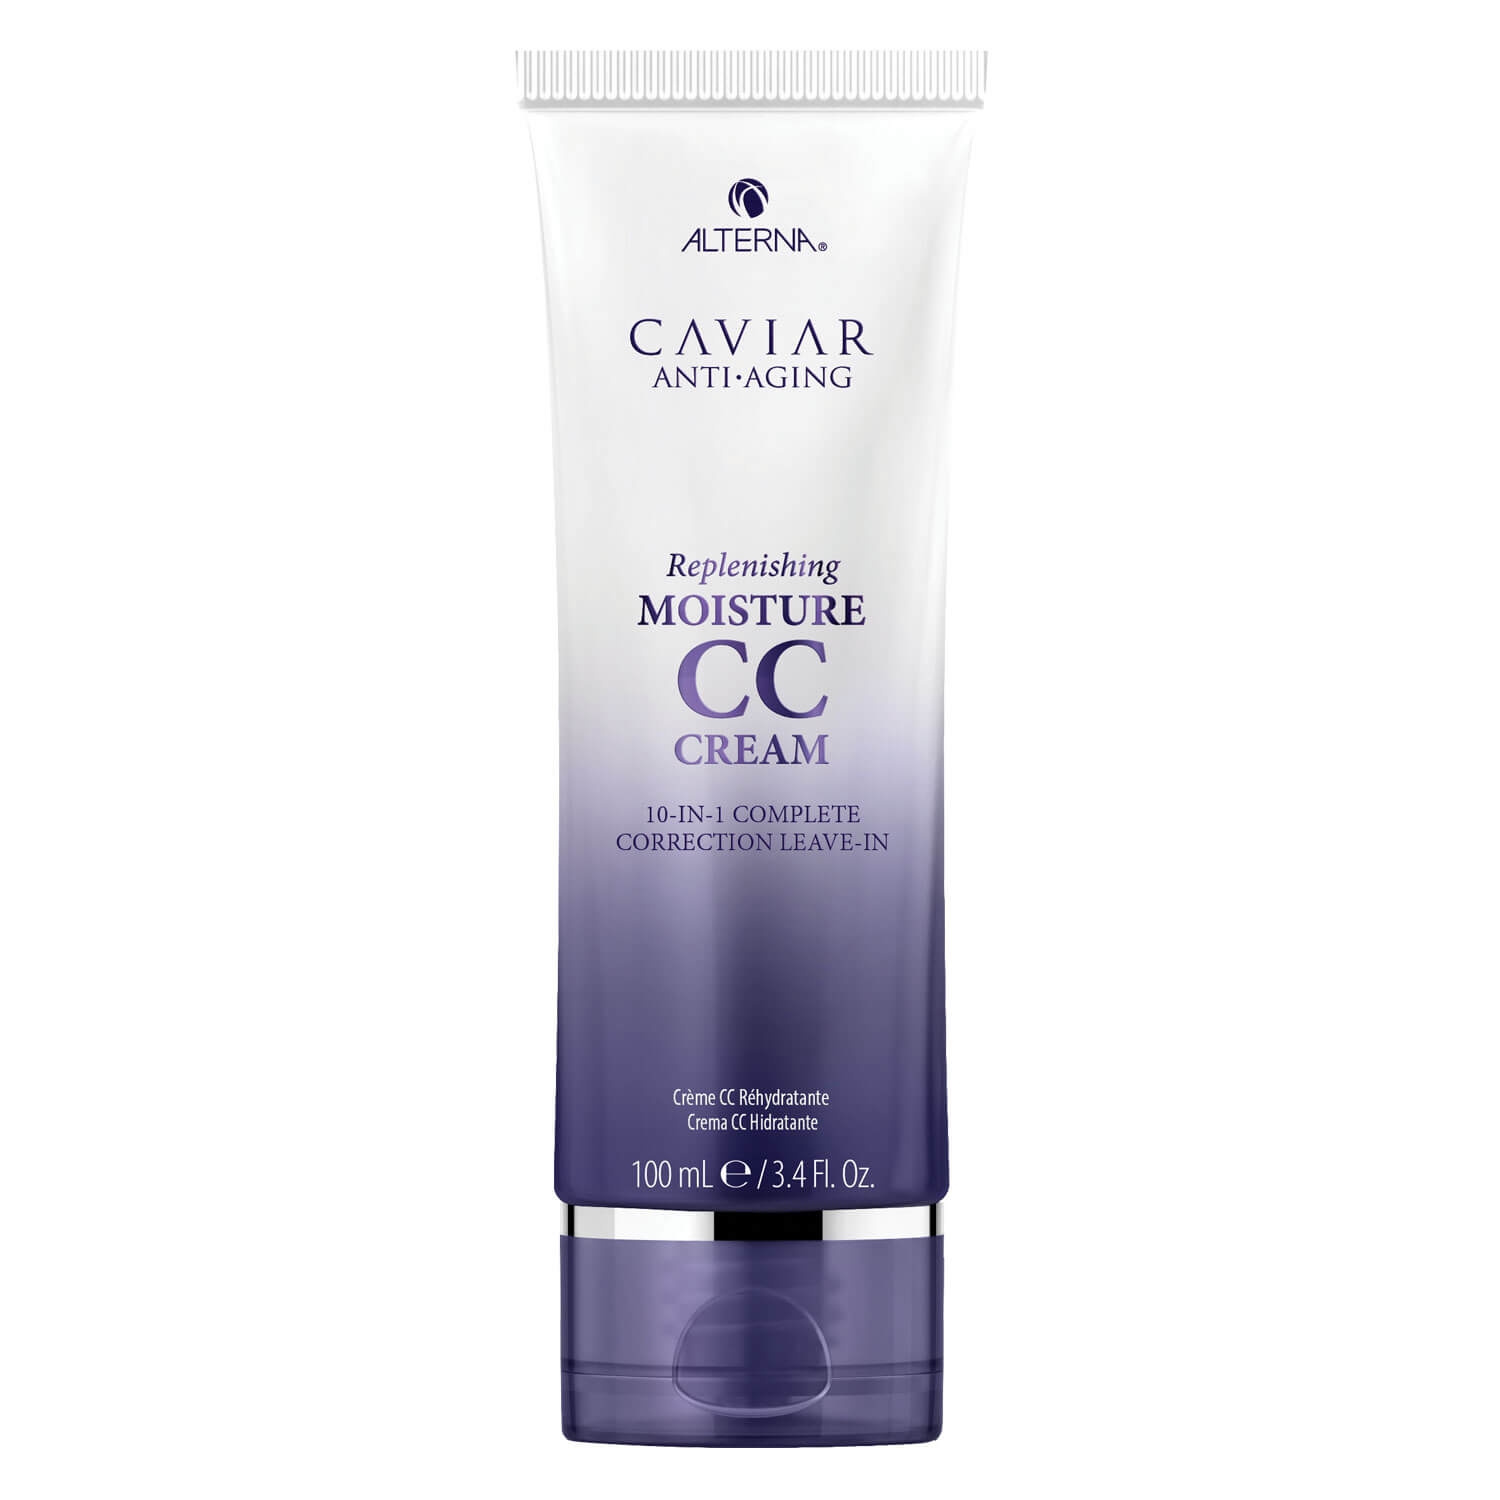 Image du produit de Caviar Anti Aging - Replenishing Moisture CC Cream